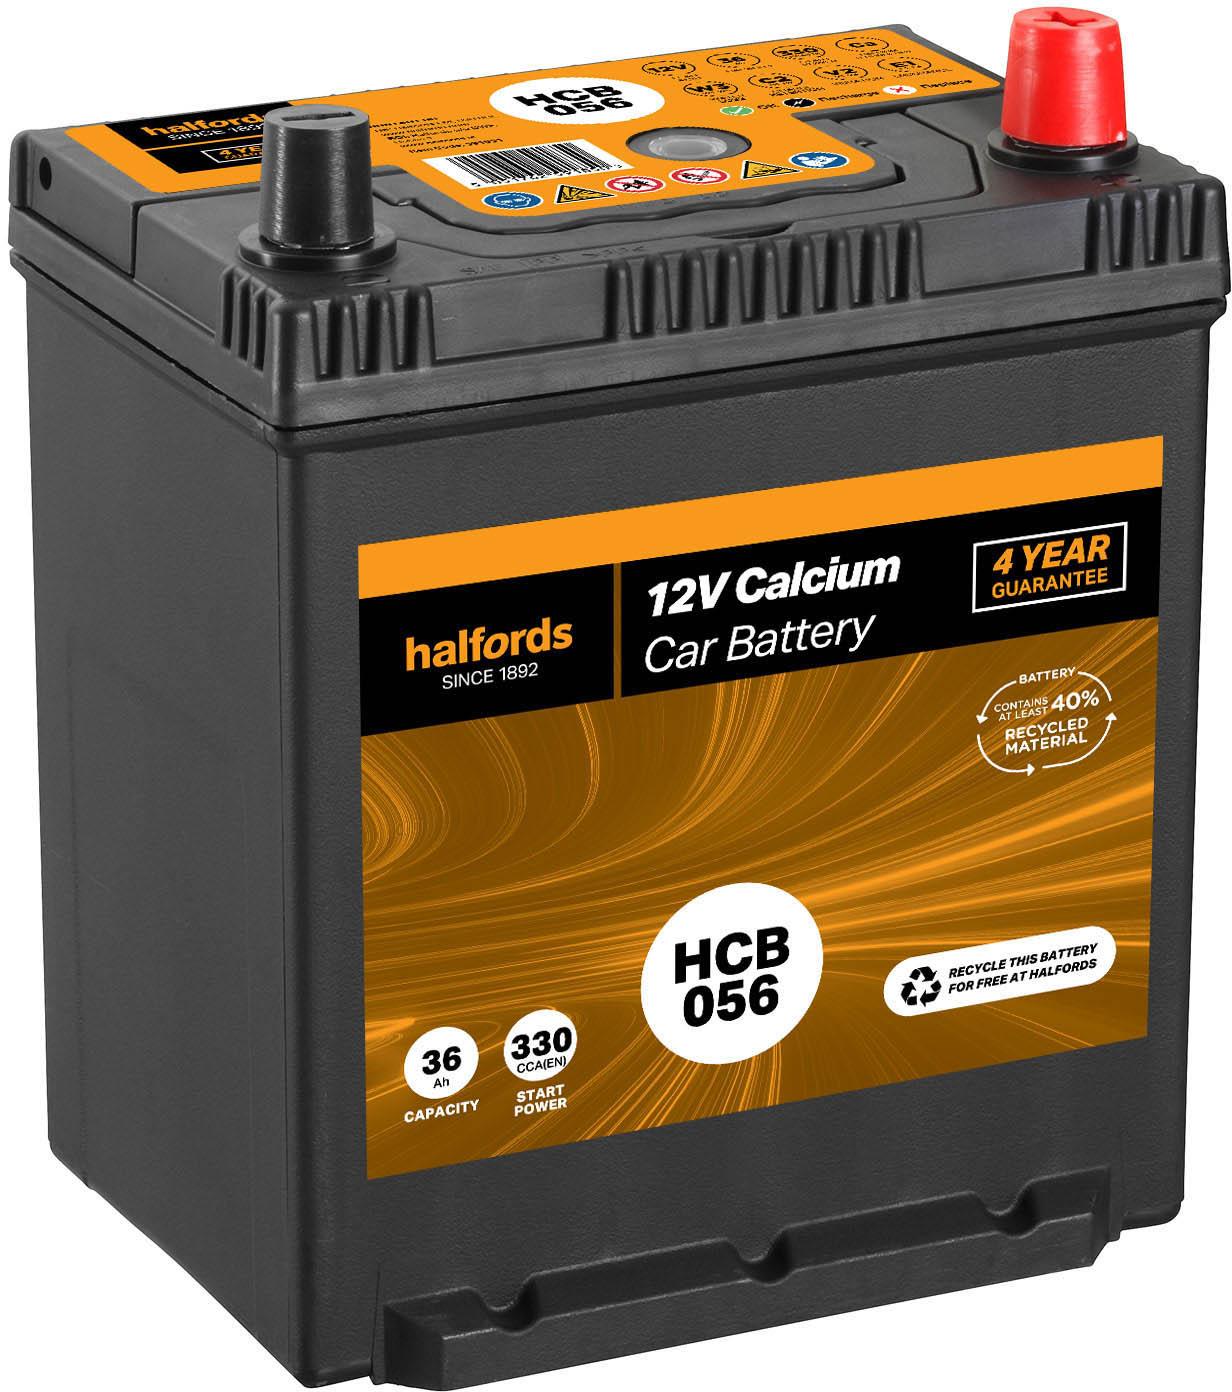 Halfords Hb056 Lead Acid 12V Car Battery 3 Year Guarantee